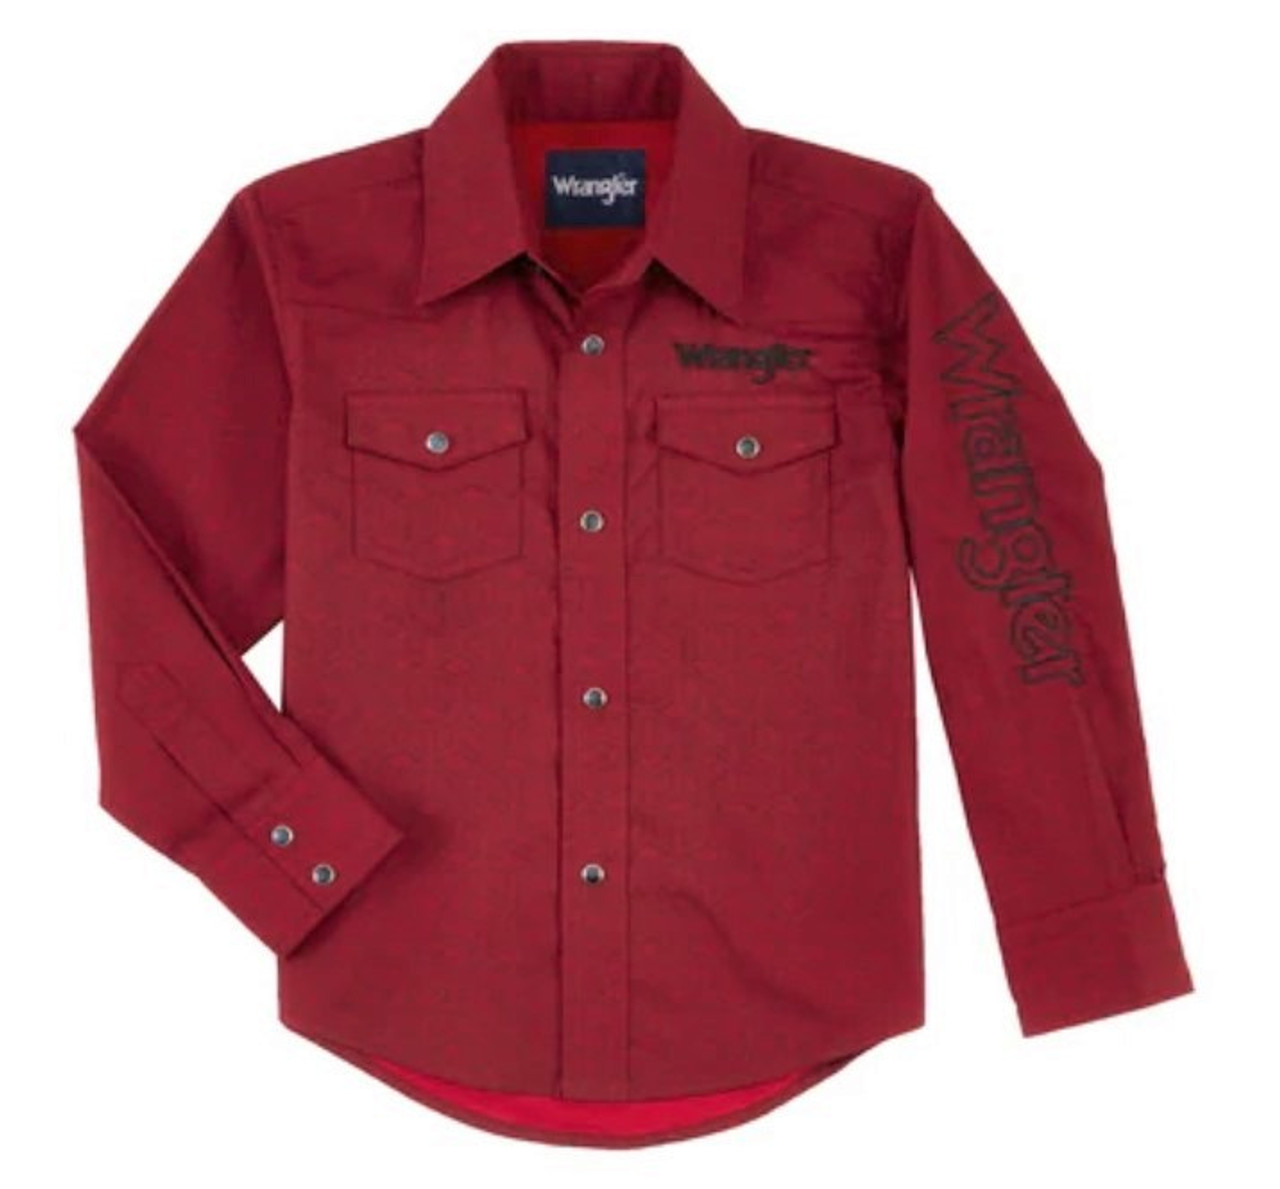 Wrangler Boy's Red Western Shirt With Logo